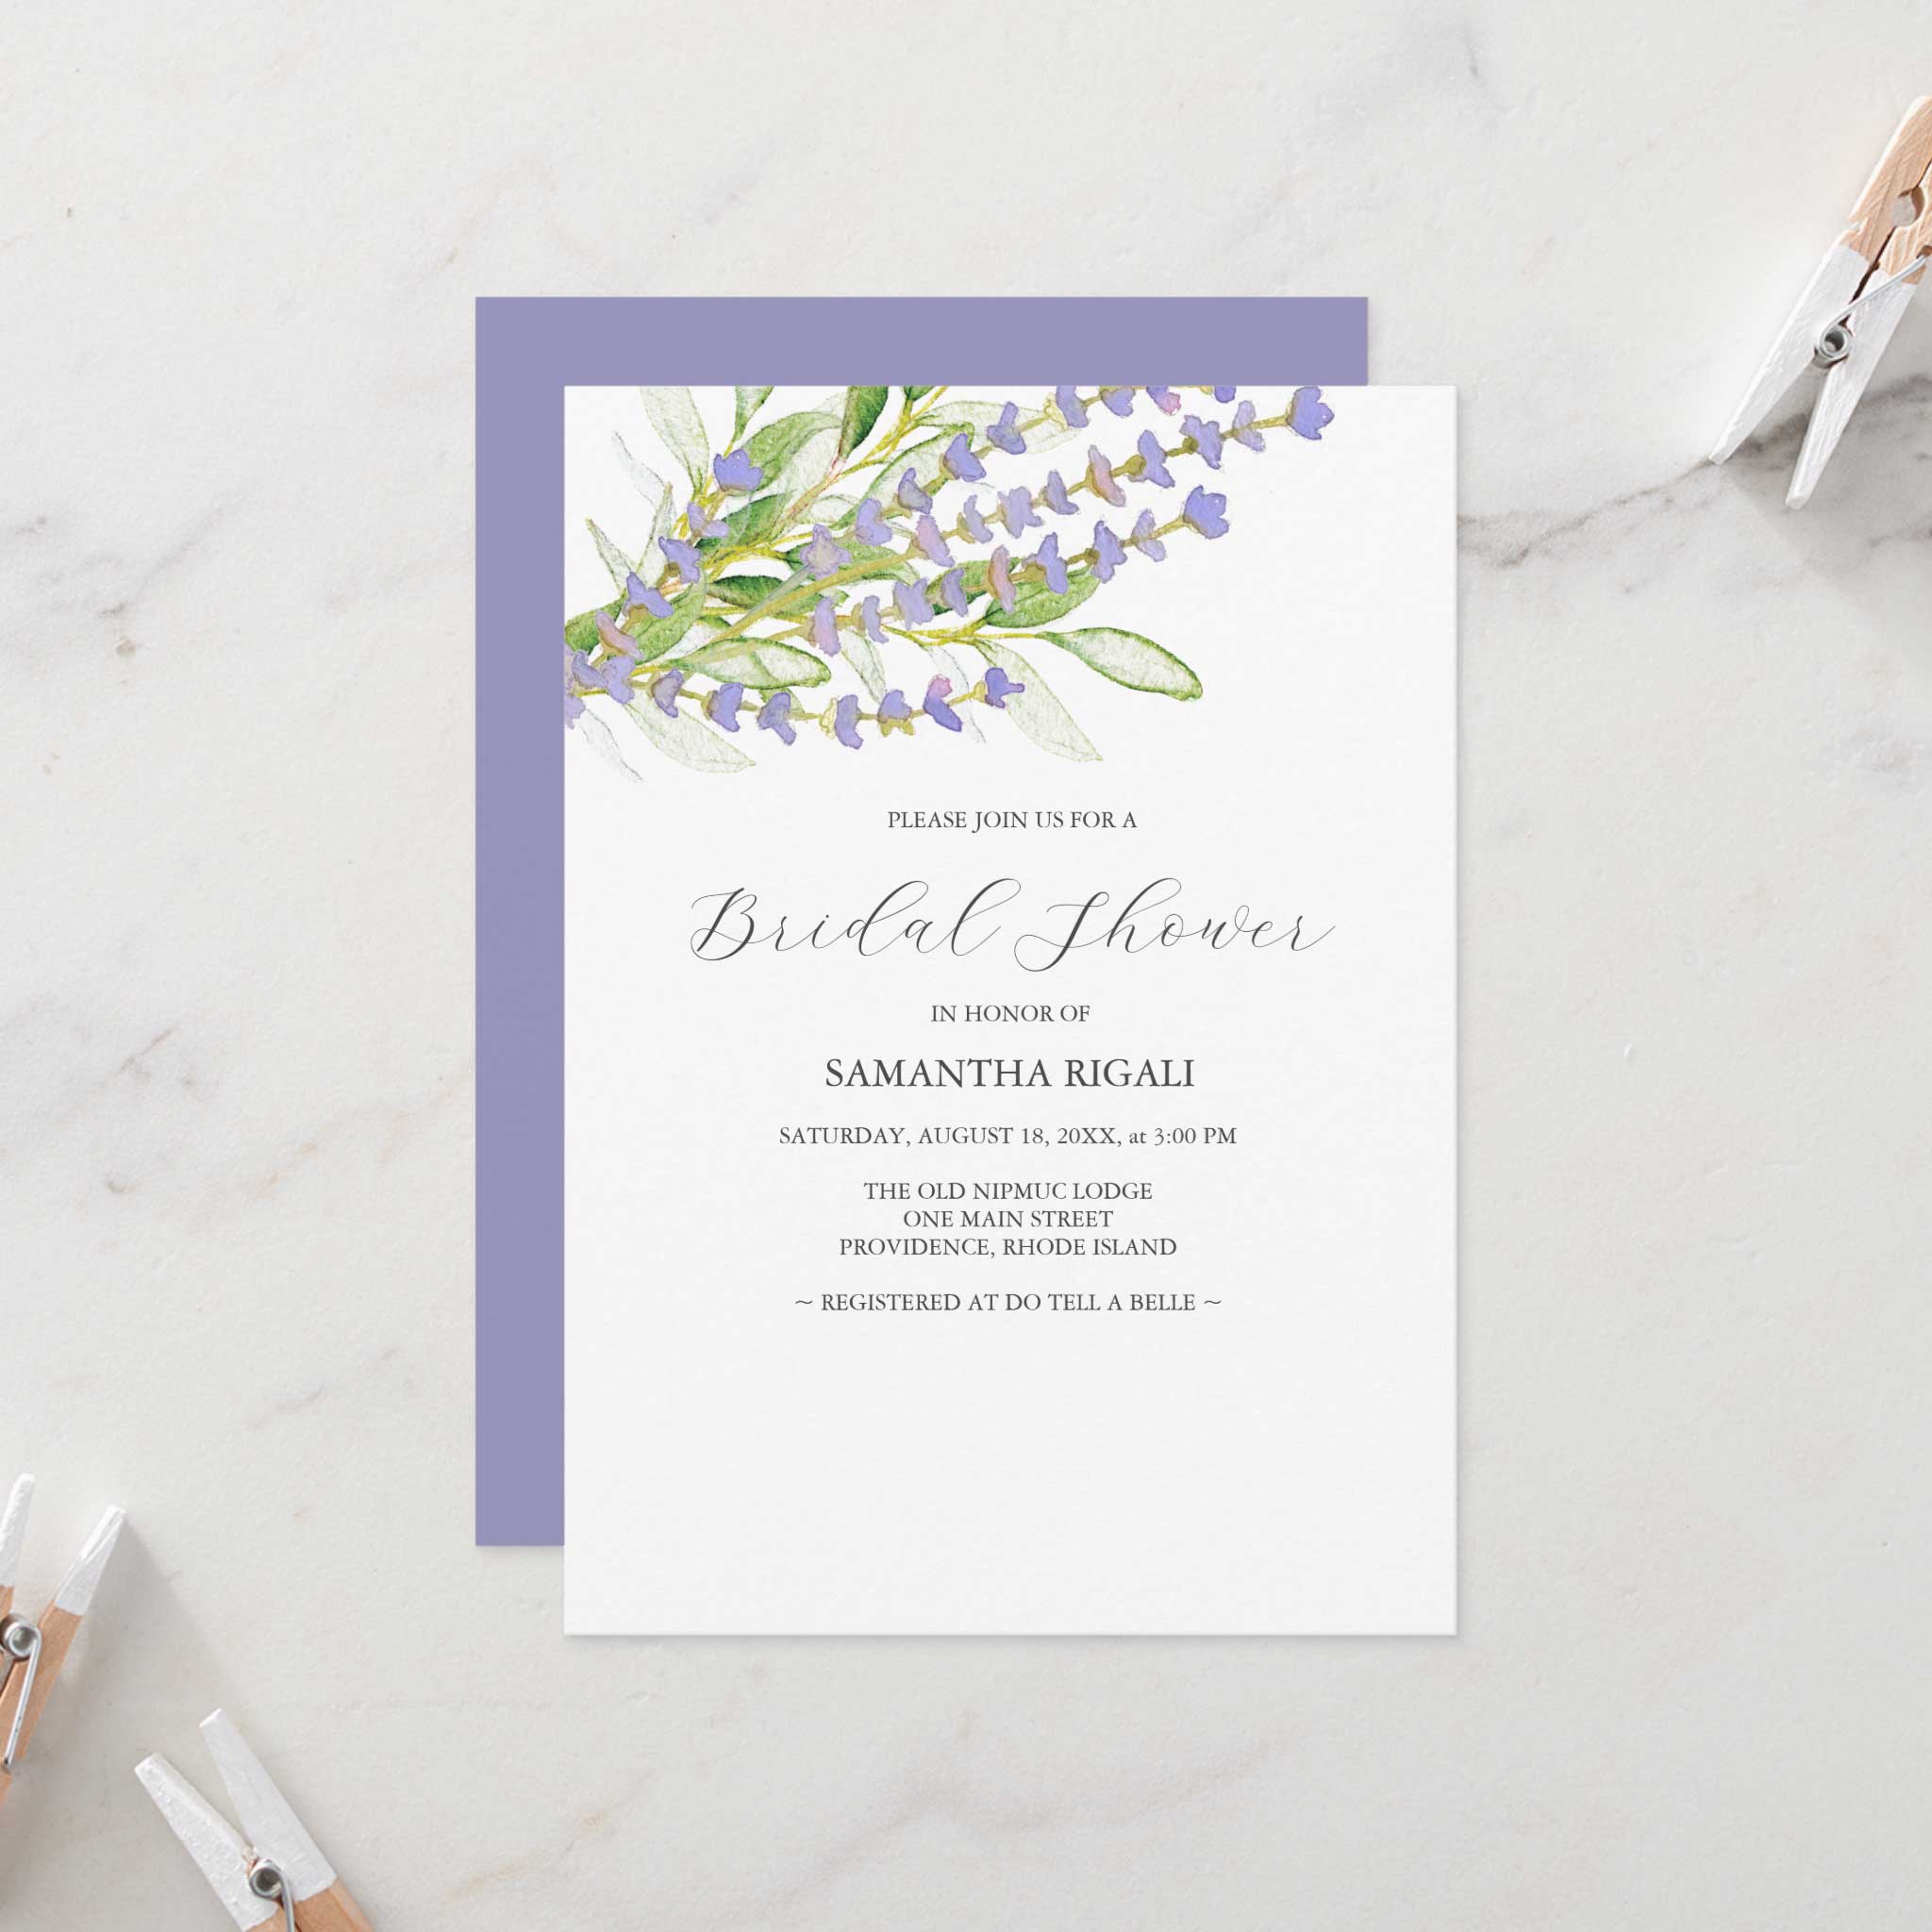 Purple bridal shower invitations features unique lavender watercolor art by Victoria Grigaliunas. Click to shop.